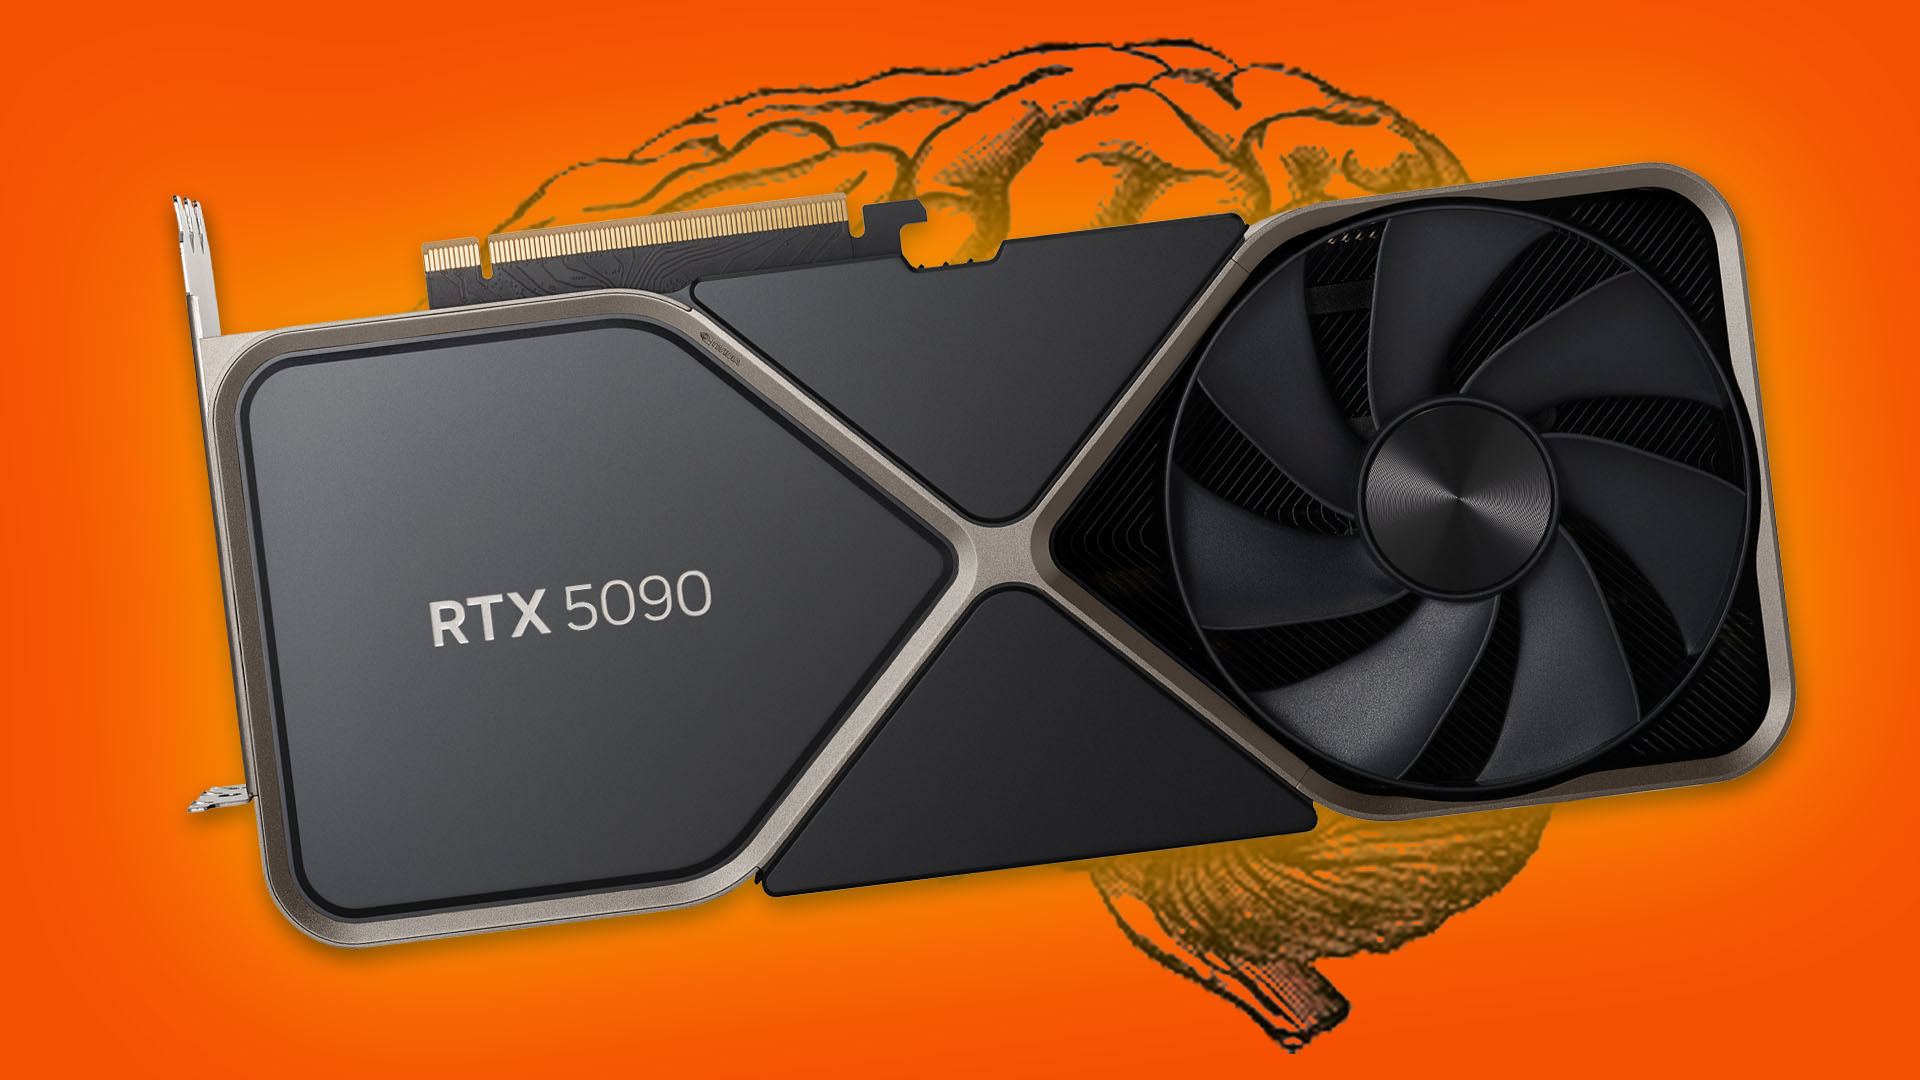 Nvidia RTX 5090 memory bandwidth to be near double RTX 4090 says leak